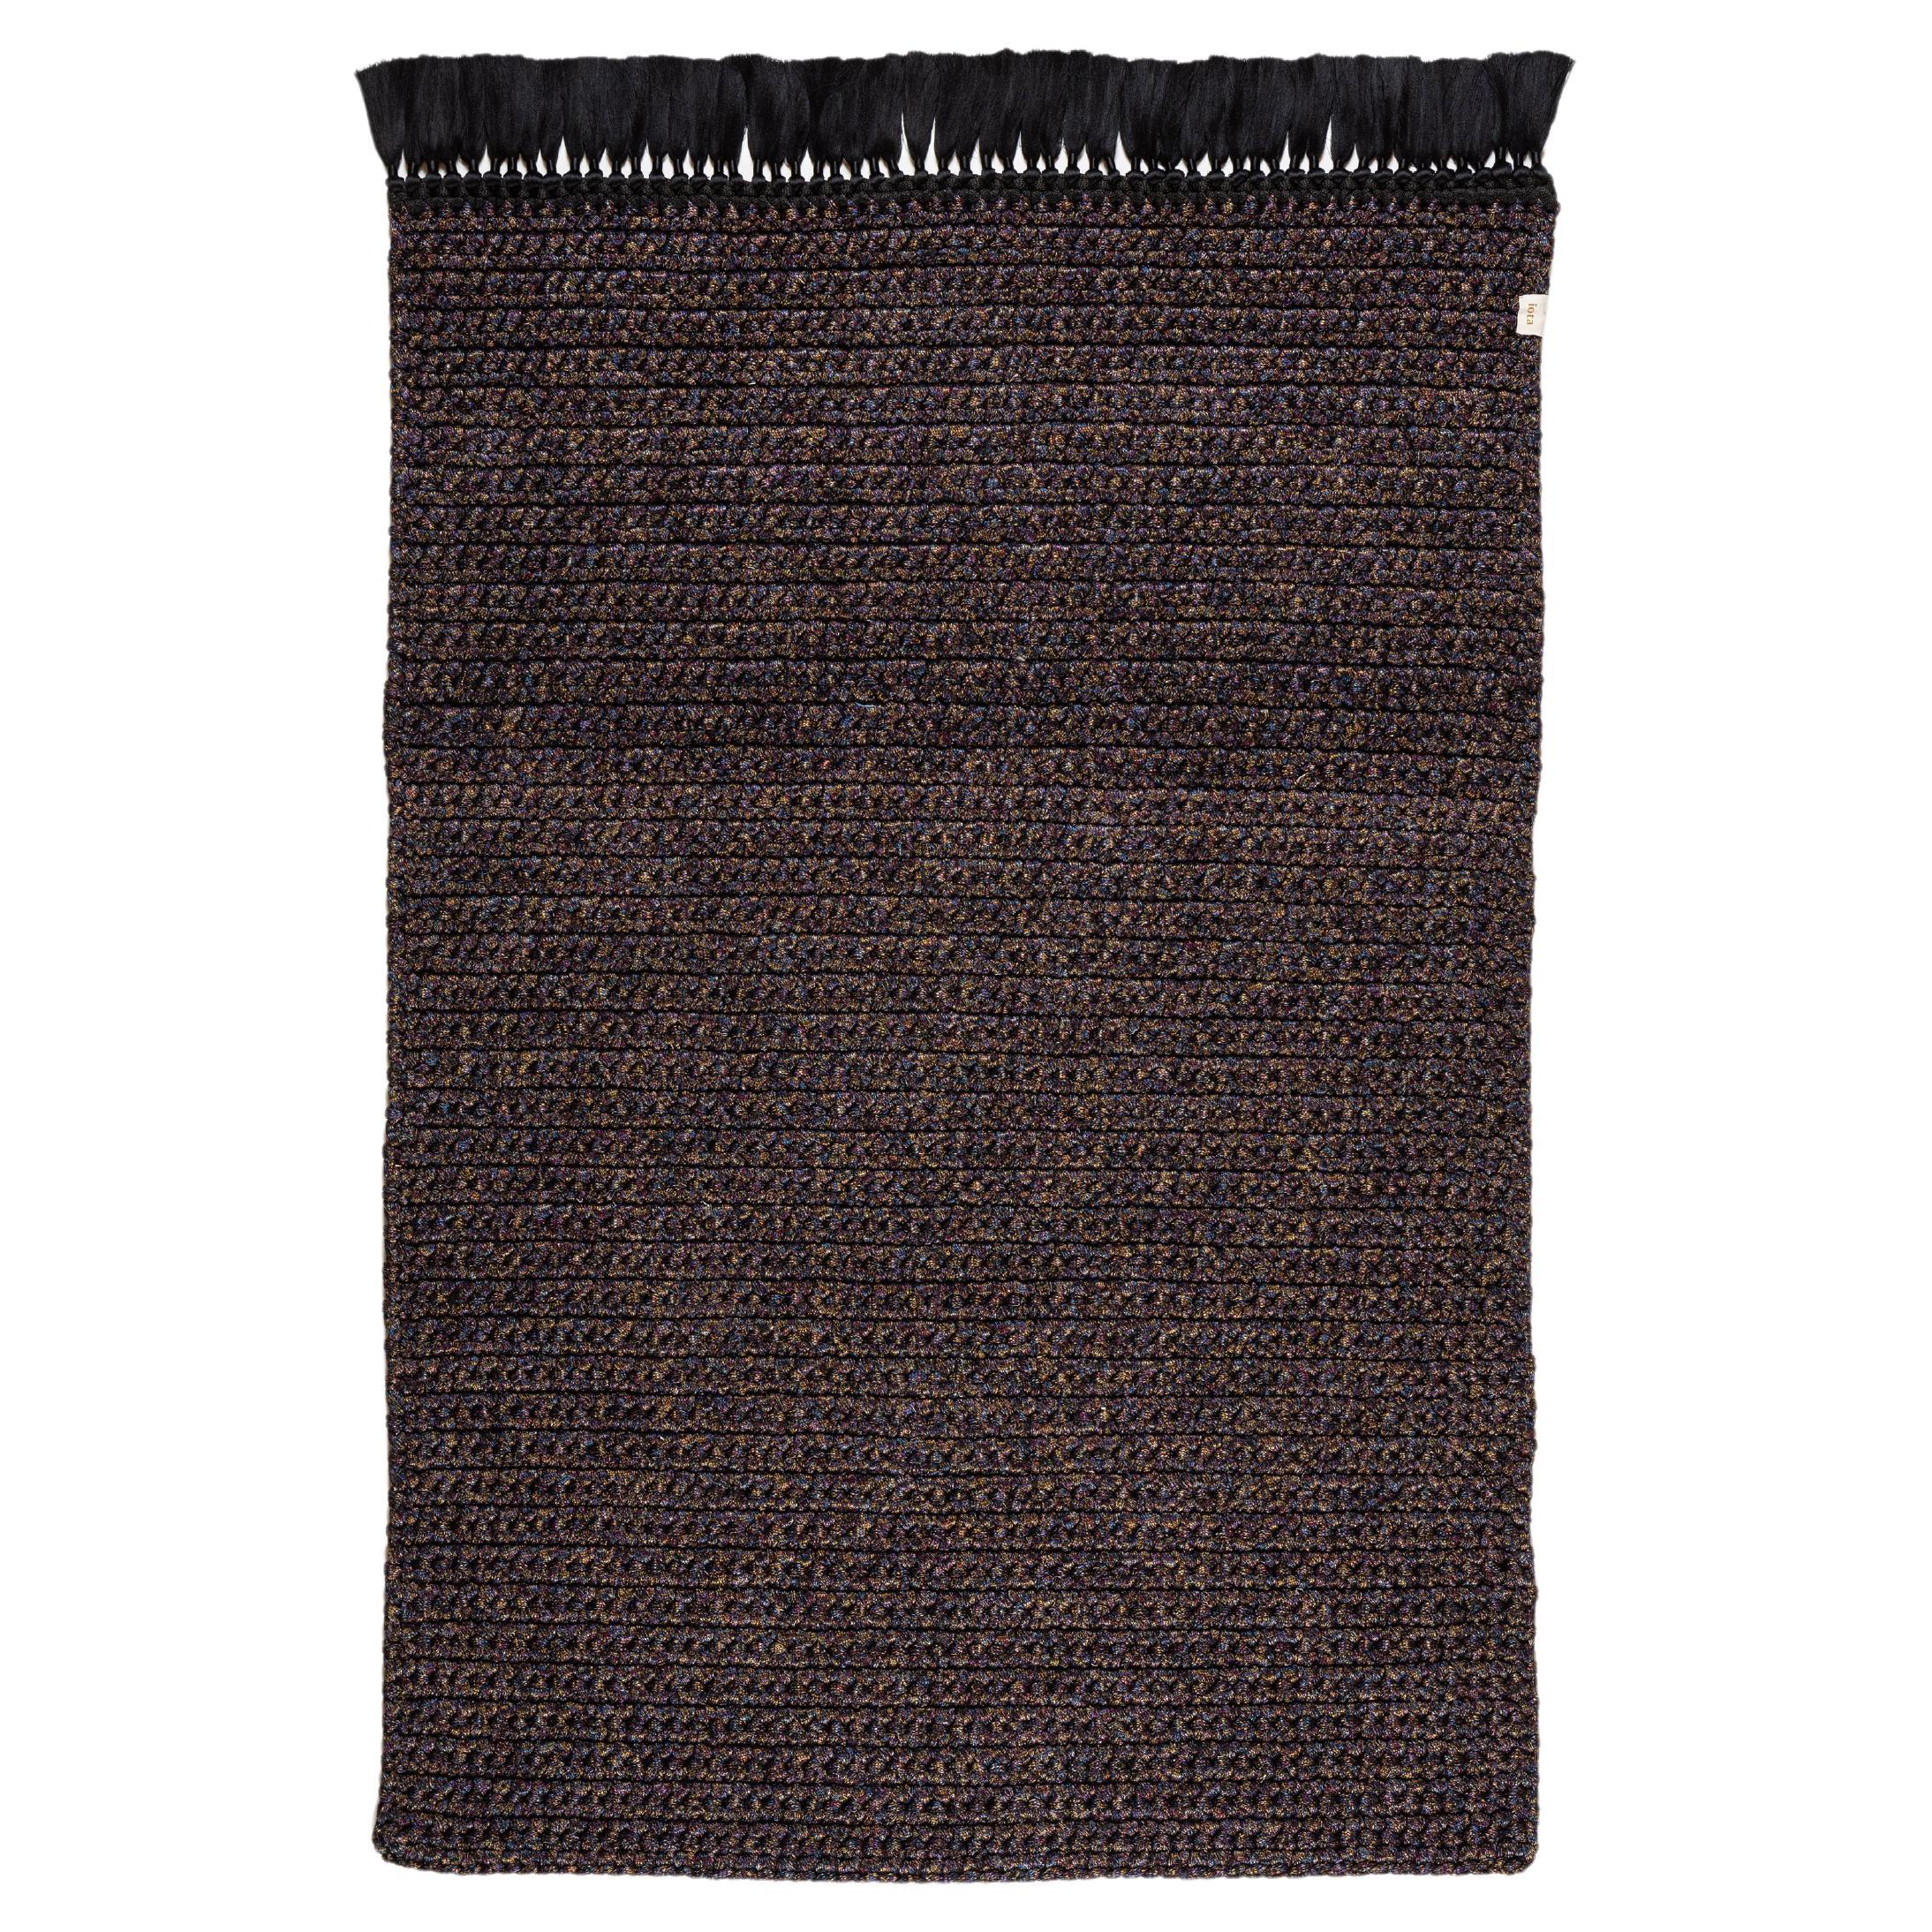 Thick Rug in Black Colourful Rust Handmade Crochet by iota